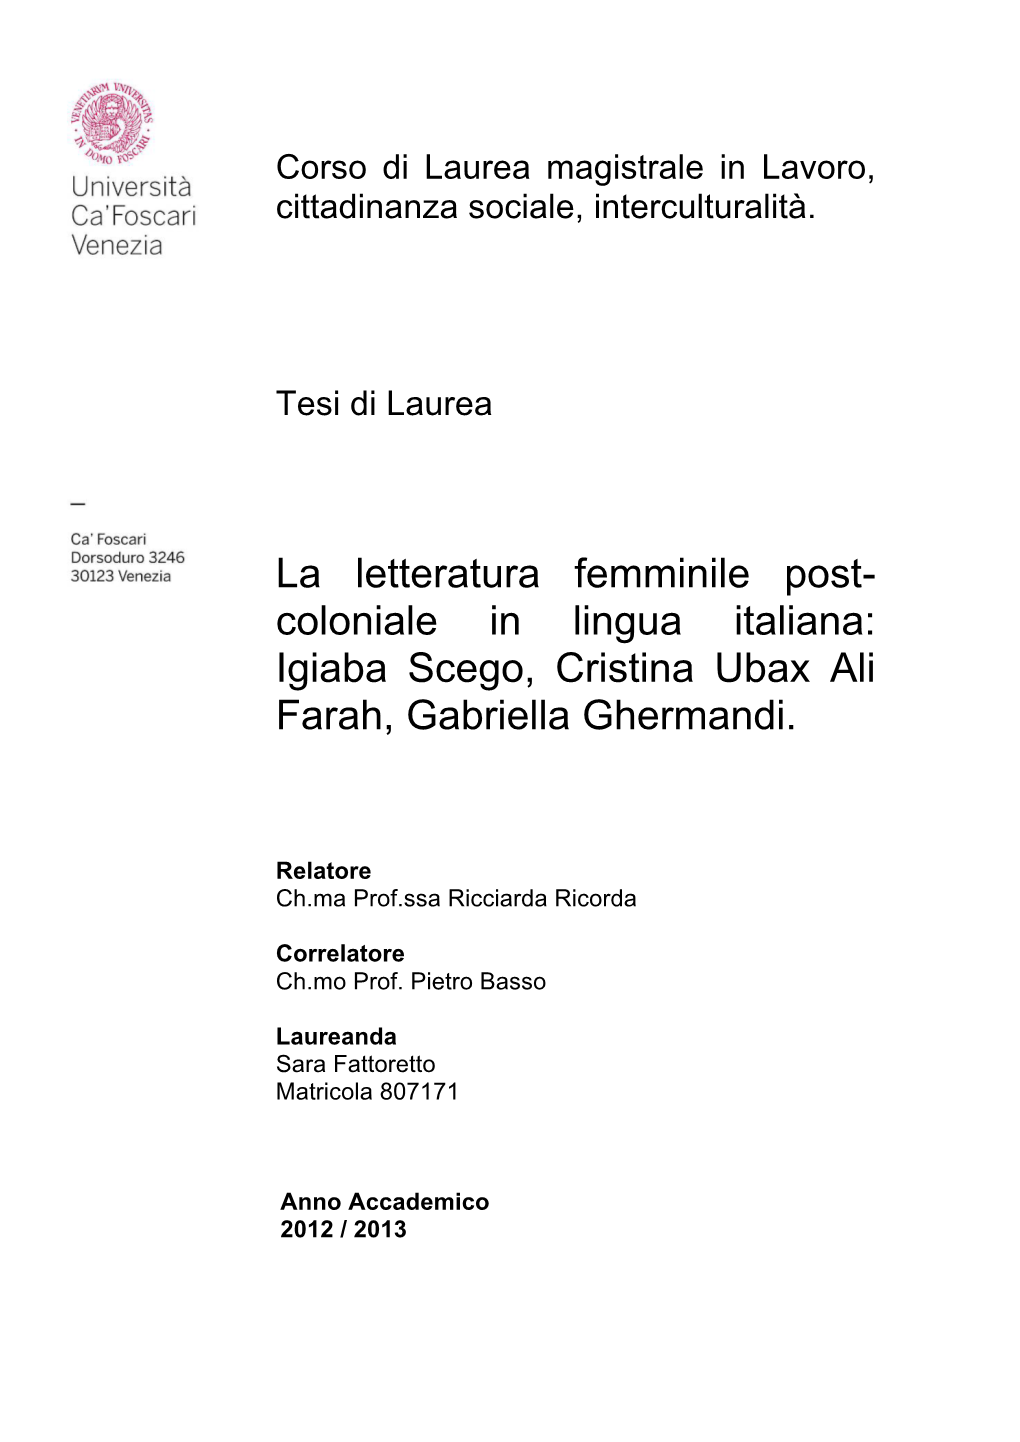 Coloniale in Lingua Italiana: Igiaba Scego, Cristina Ubax Ali Farah, Gabriella Ghermandi